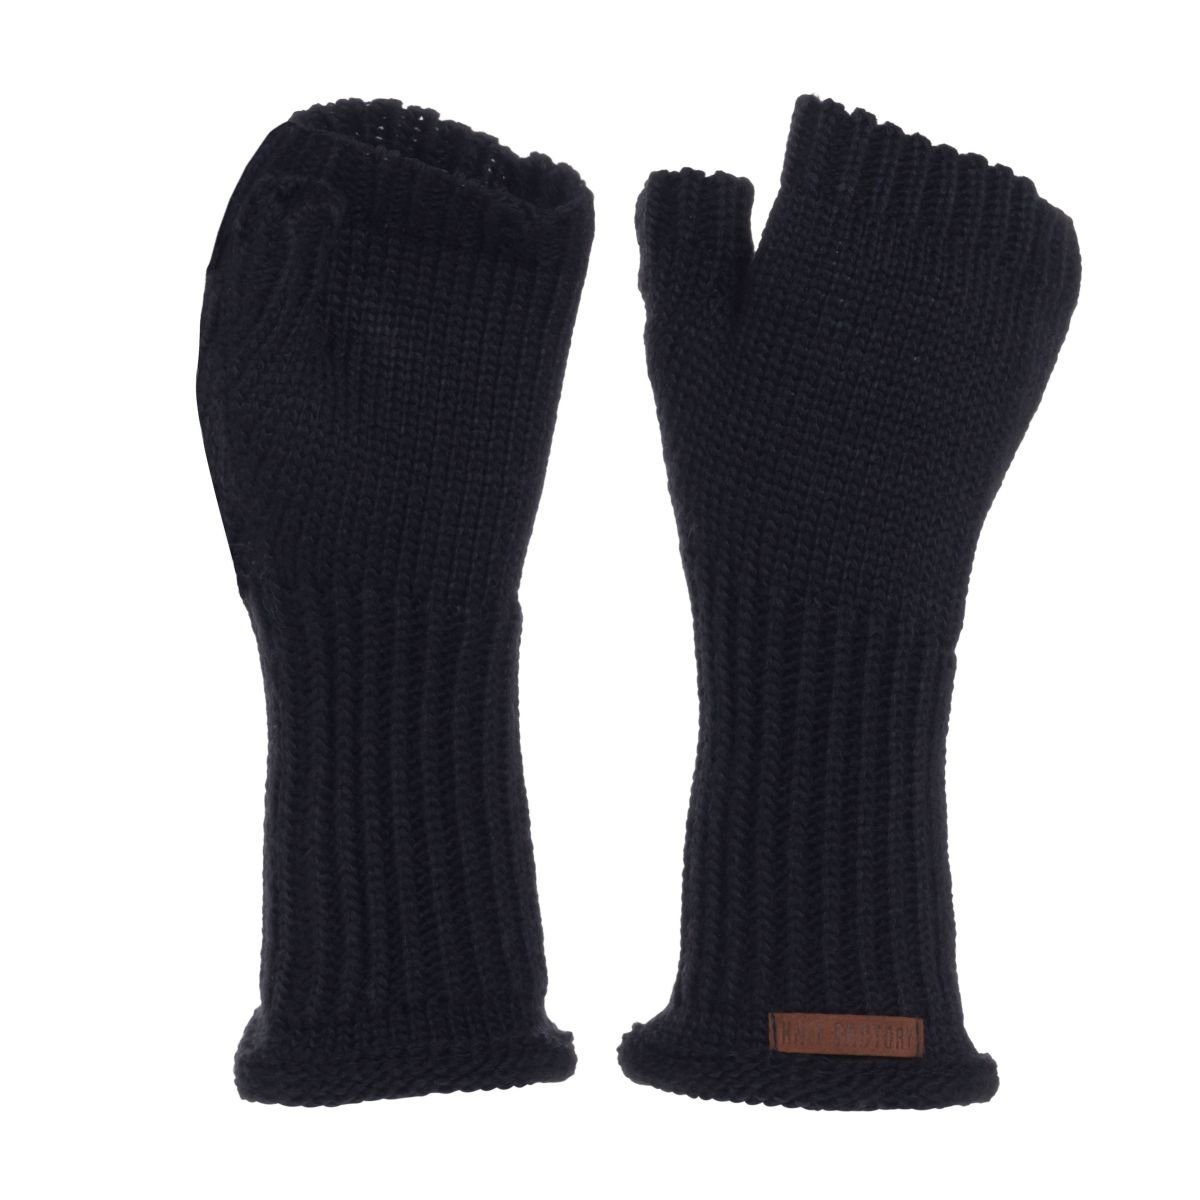 Knit Factory Strickhandschuhe Cleo Handschuhe One Size Glatt Dunkelblau Handschuhe Handstulpen Handschuhe ihne Finger Navy